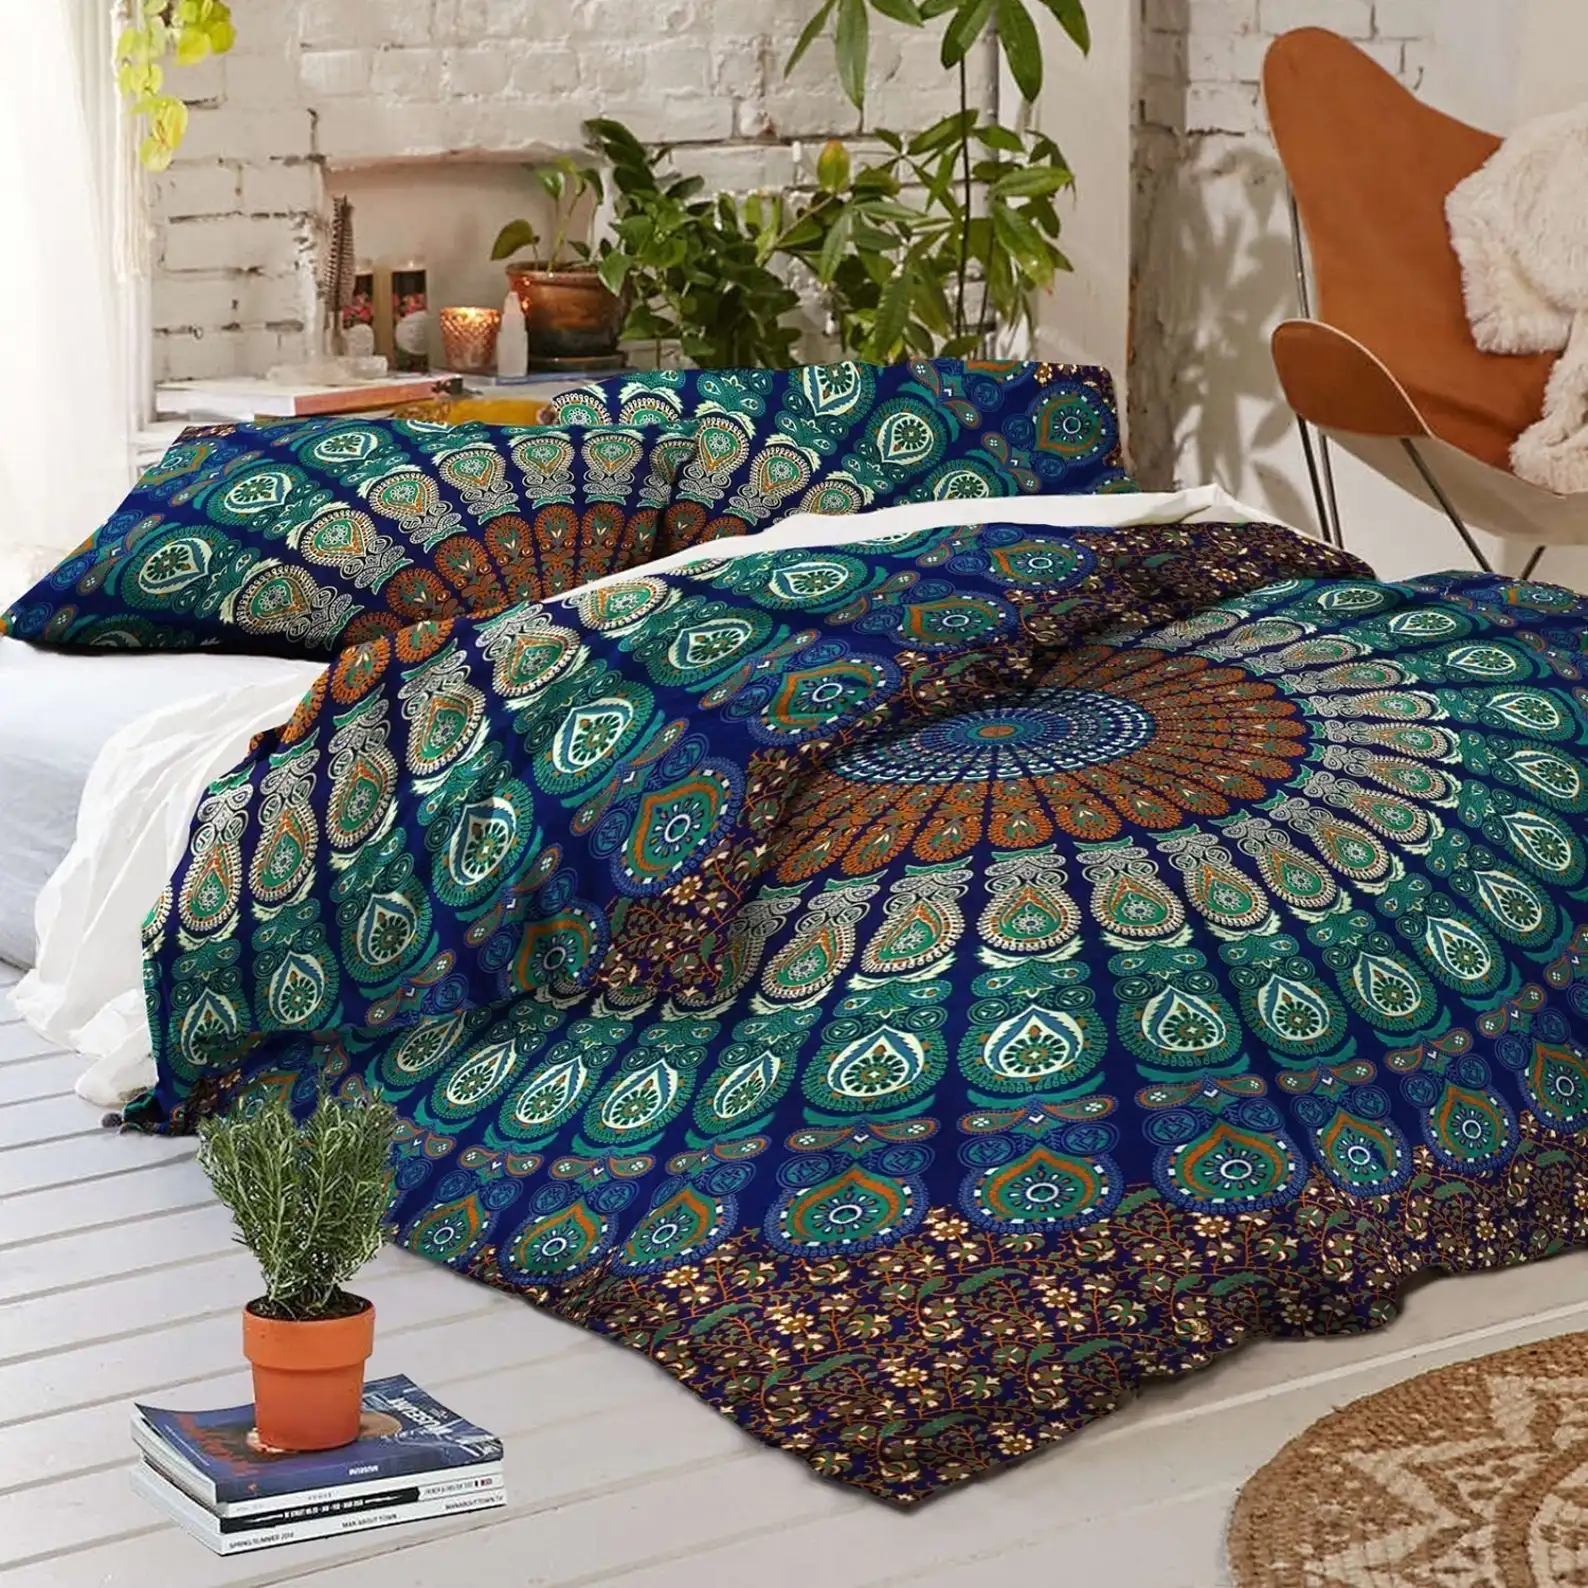 King Size Mandala Bedding Tapestry Hippie Bohemian Bedspread Bed Cover Throw Bohemian Mandala Comforter Set